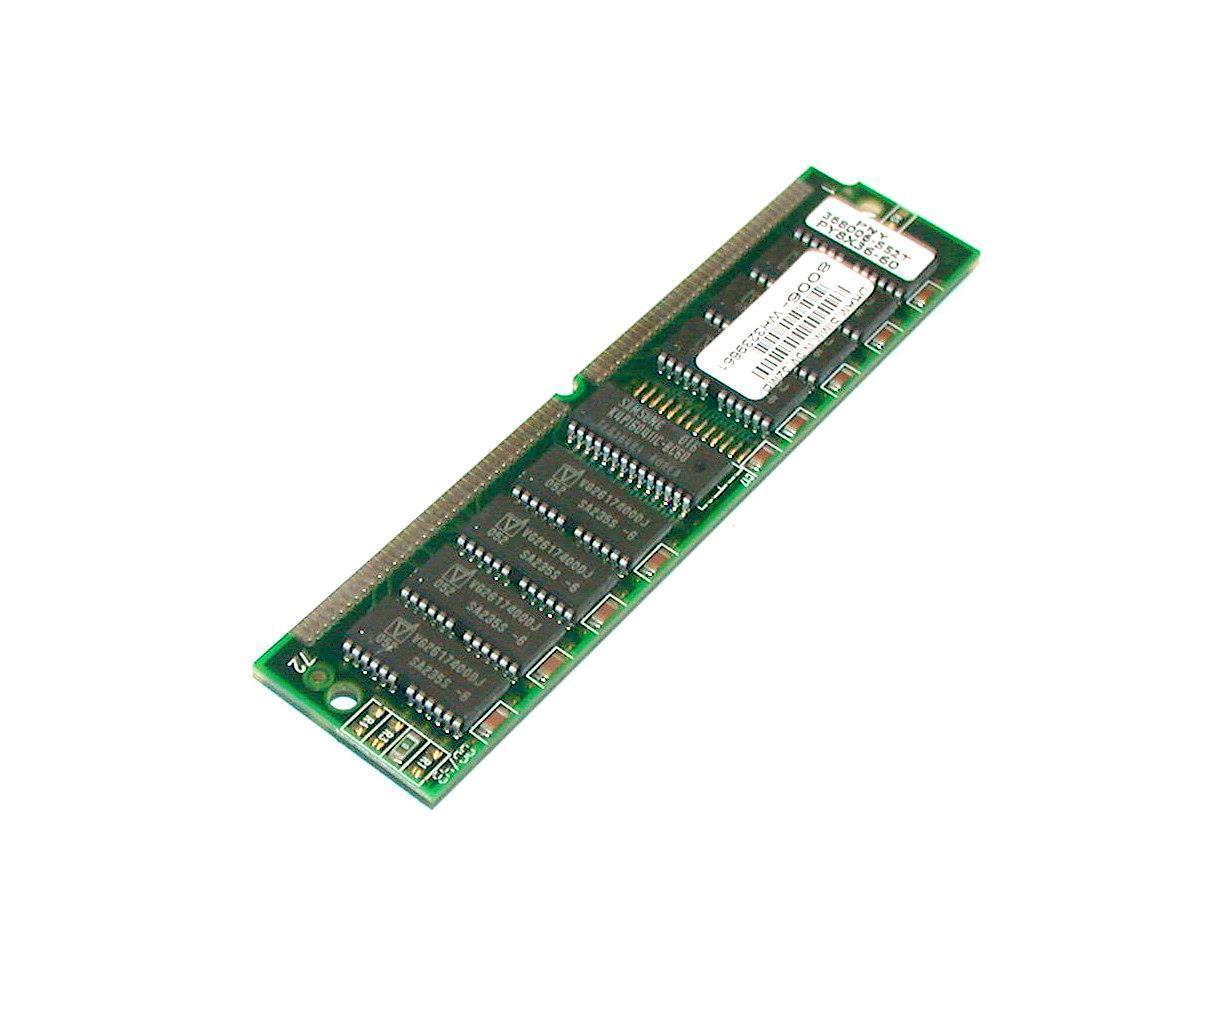 NEW PNY TECHNOLOGIES  368006-S52T  RAM MEMORY MODULE 32M 72 PIN SIMM DRAM